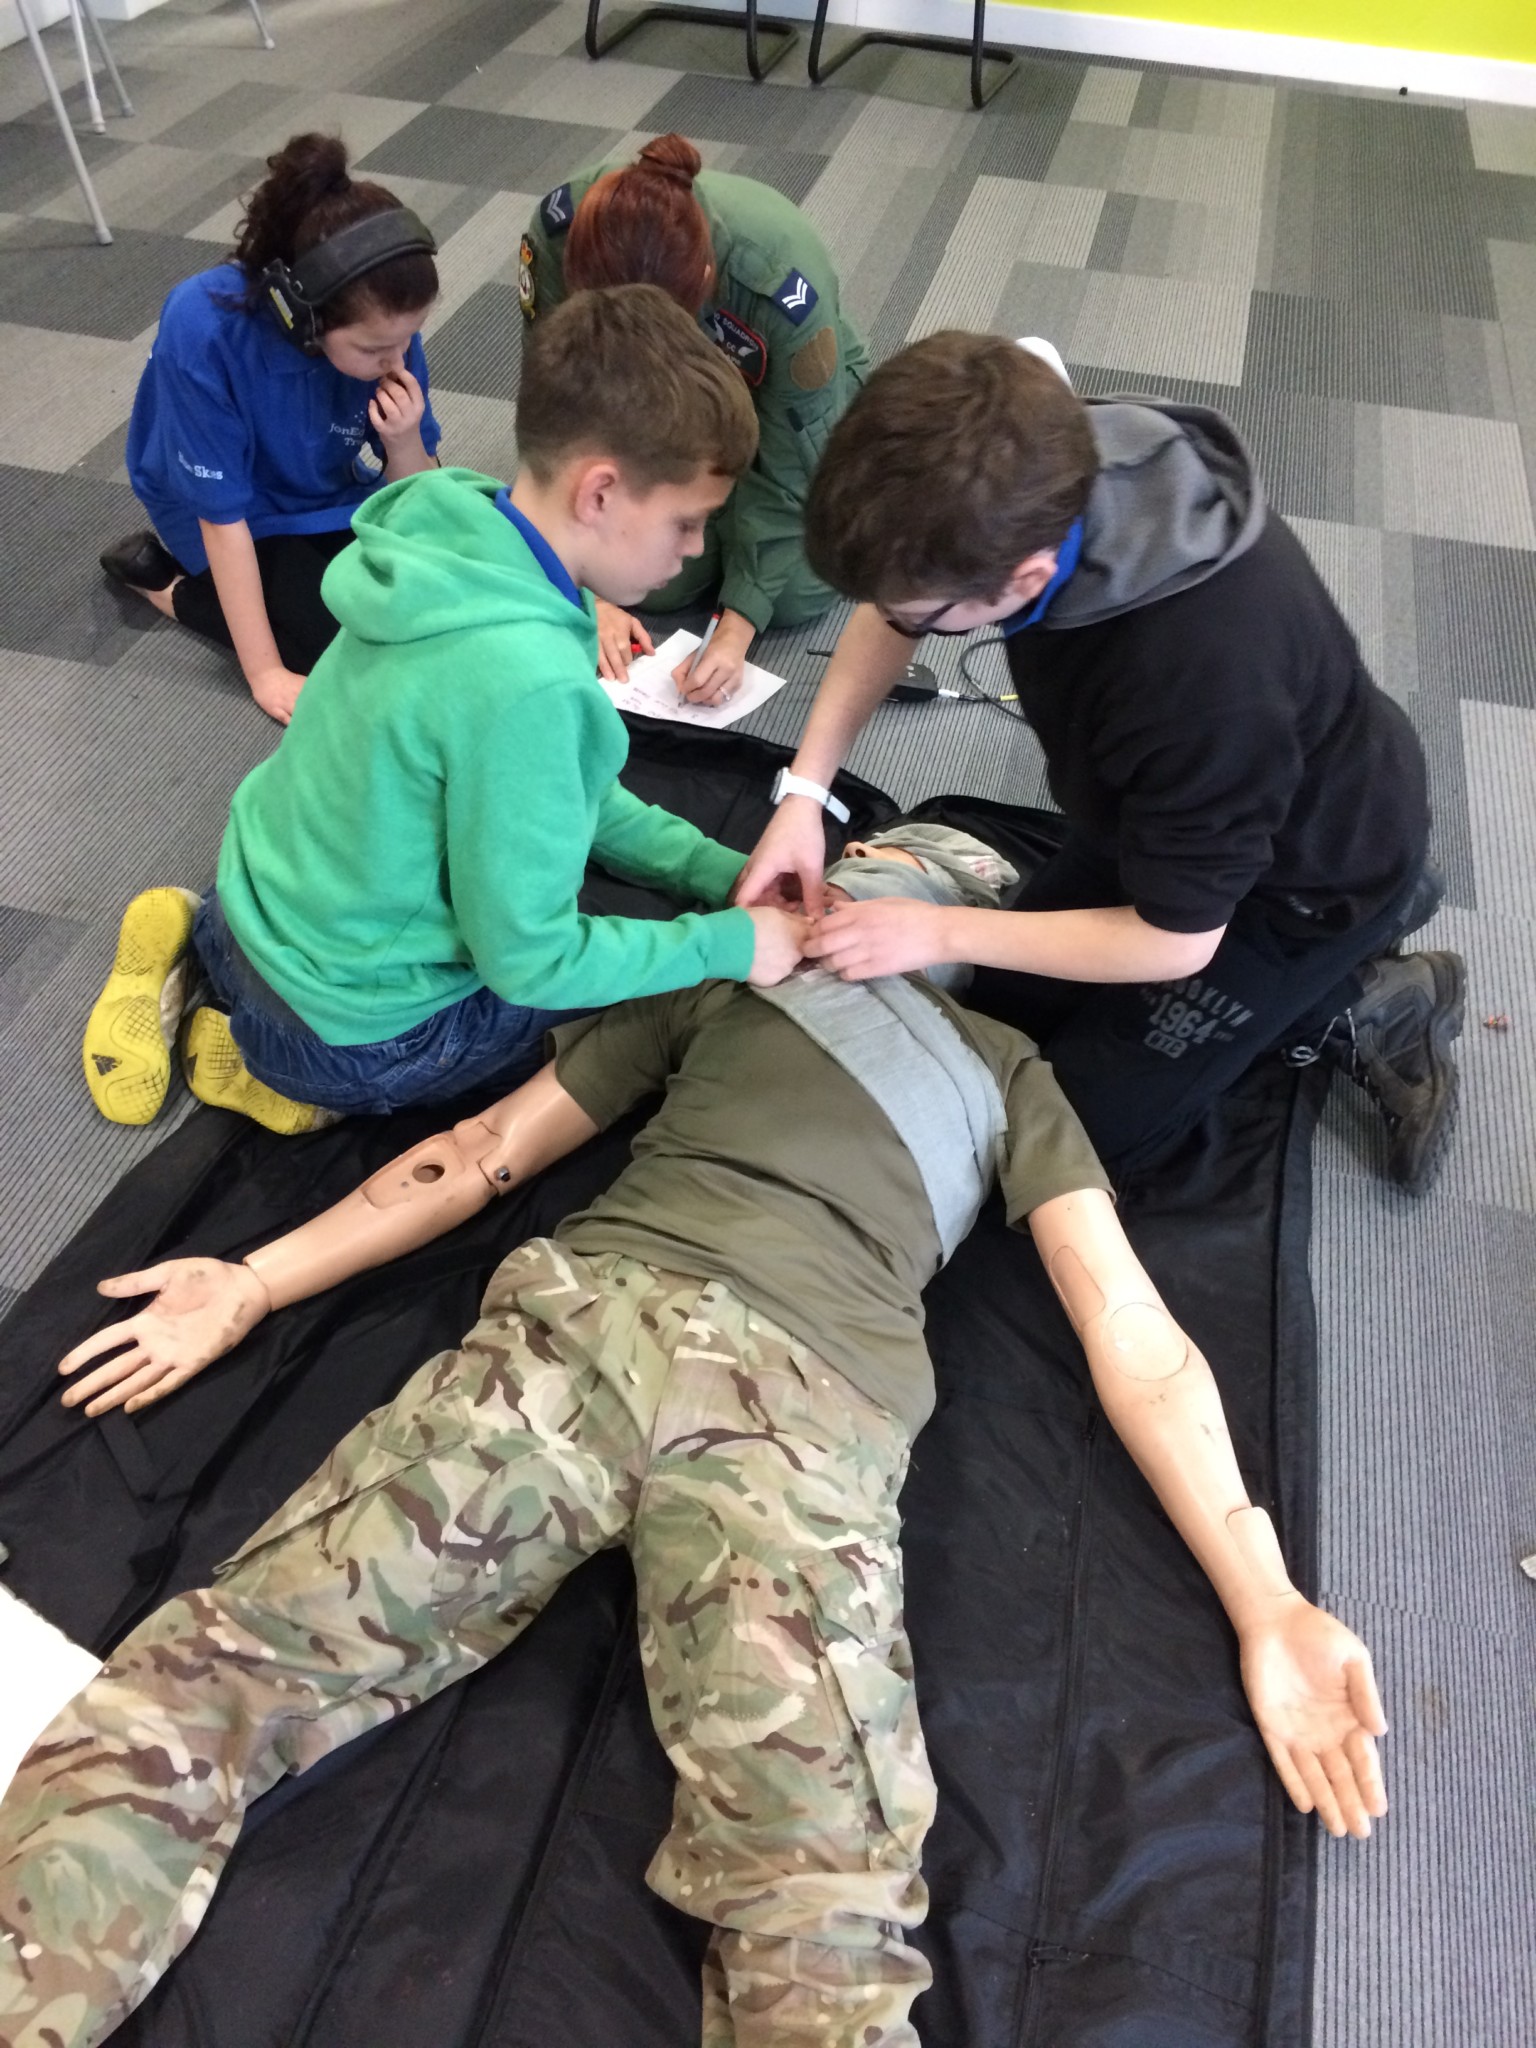 Mannequin challenge at RAF Brize Norton's Tactical Medical Wing